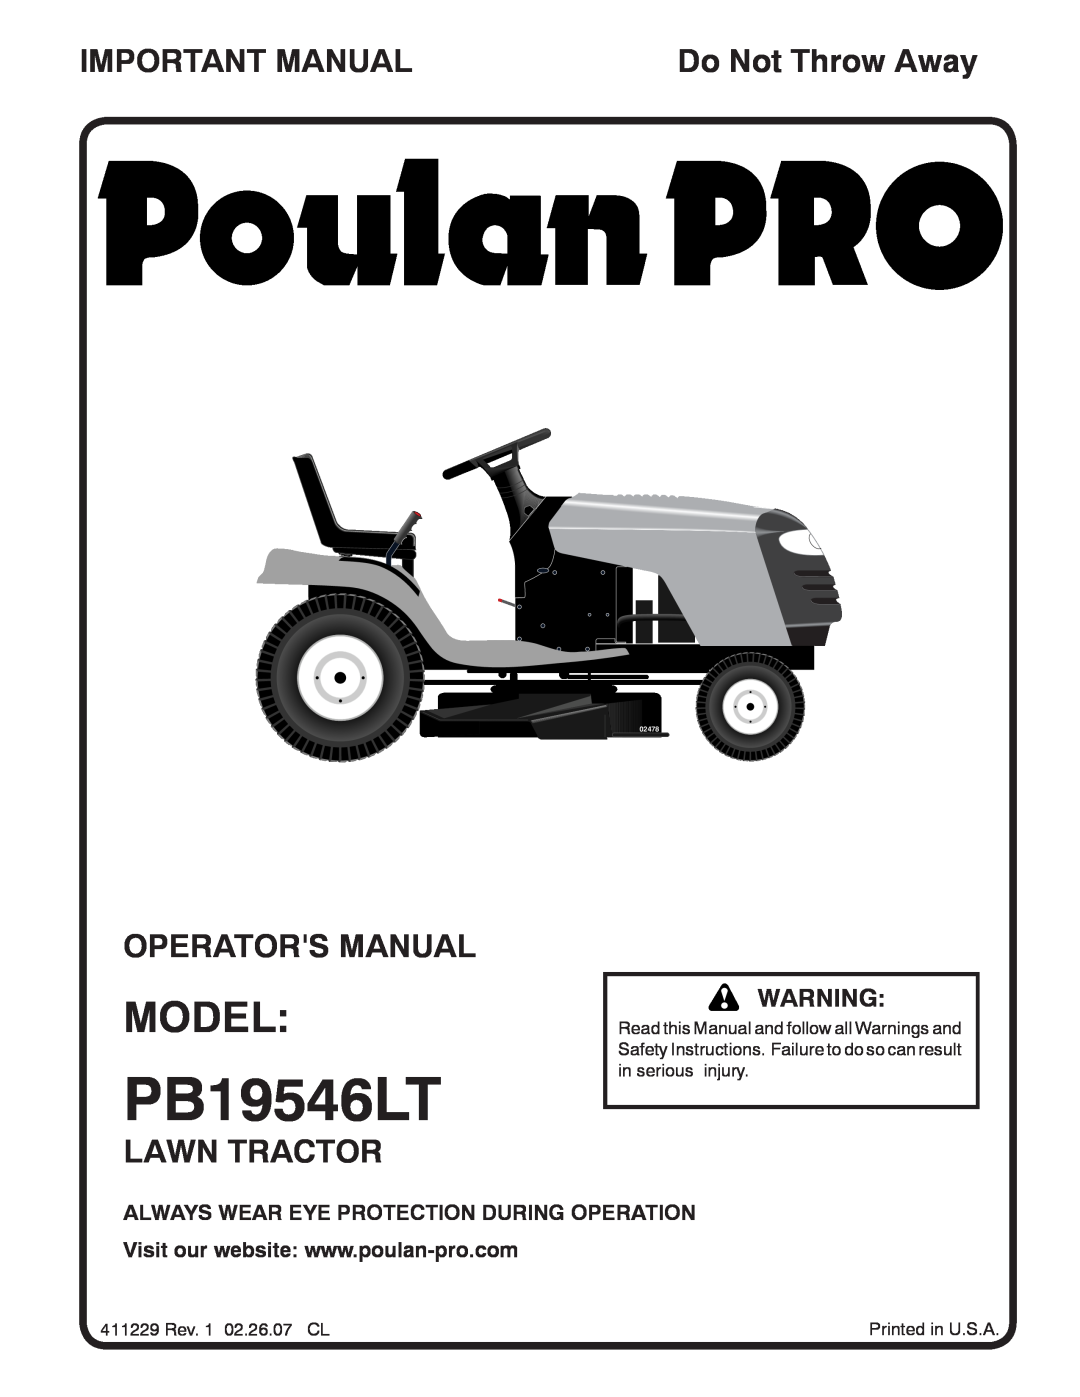 Poulan pb19546lt manual Model, Important Manual, Operators Manual, Lawn Tractor, PB19546LT, Do Not Throw Away, 02478 